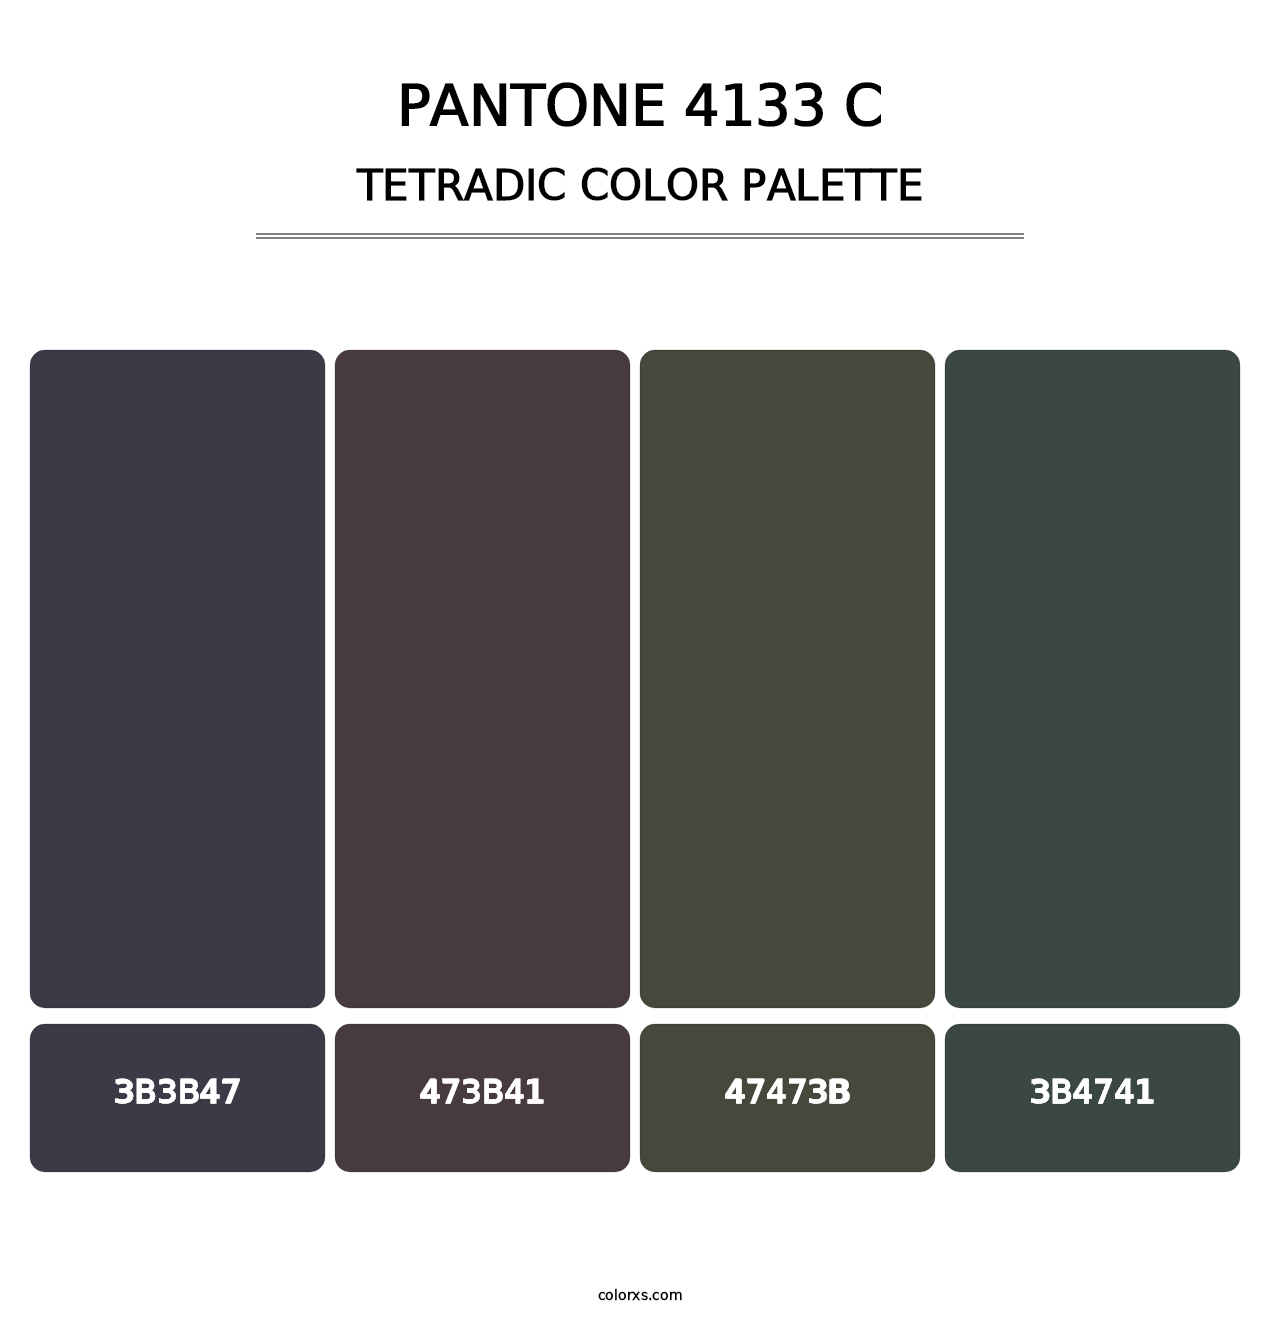 PANTONE 4133 C - Tetradic Color Palette